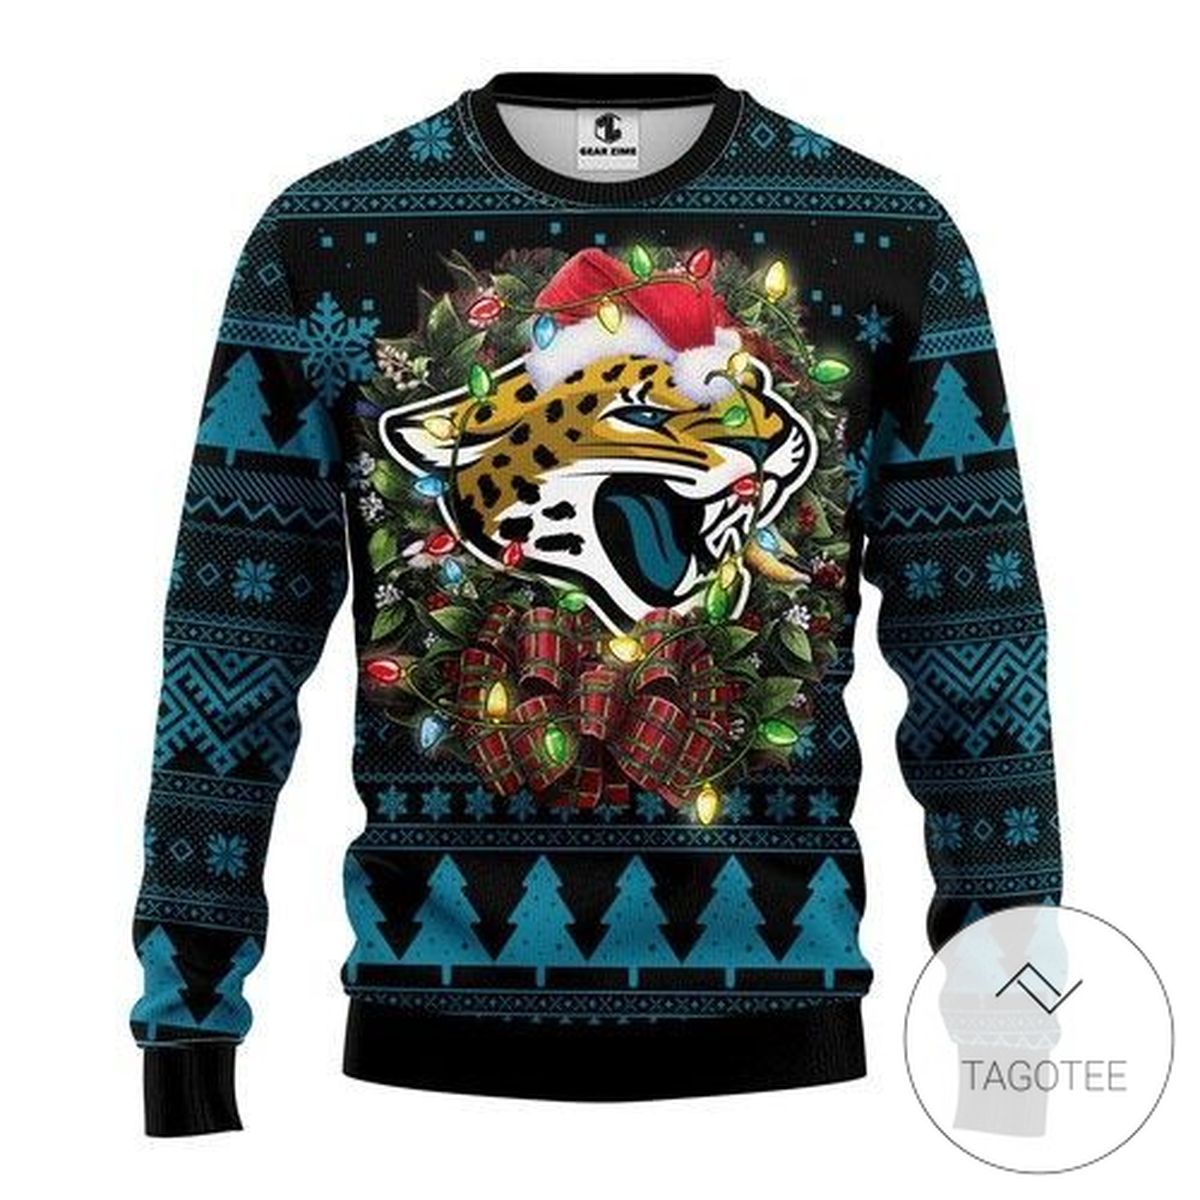 Jacksonville Jaguars Sweatshirt Knitted Ugly Christmas Sweater